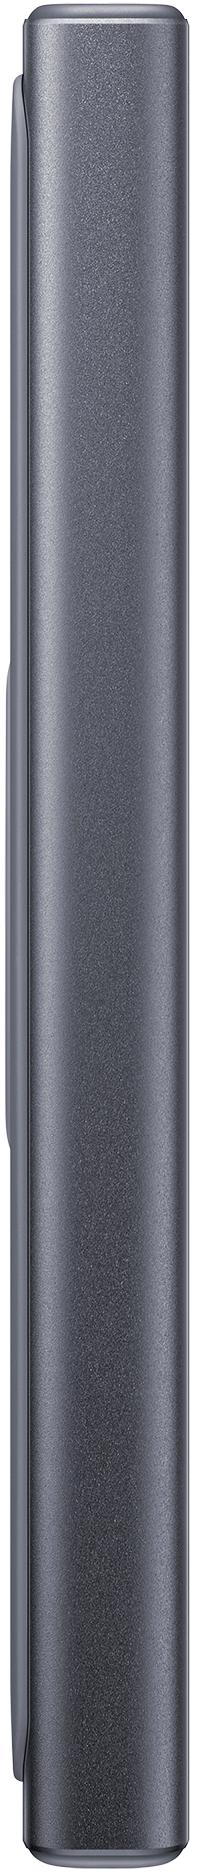 Samsung - Powerbank Samsung Wireless 10000mAh Cinza